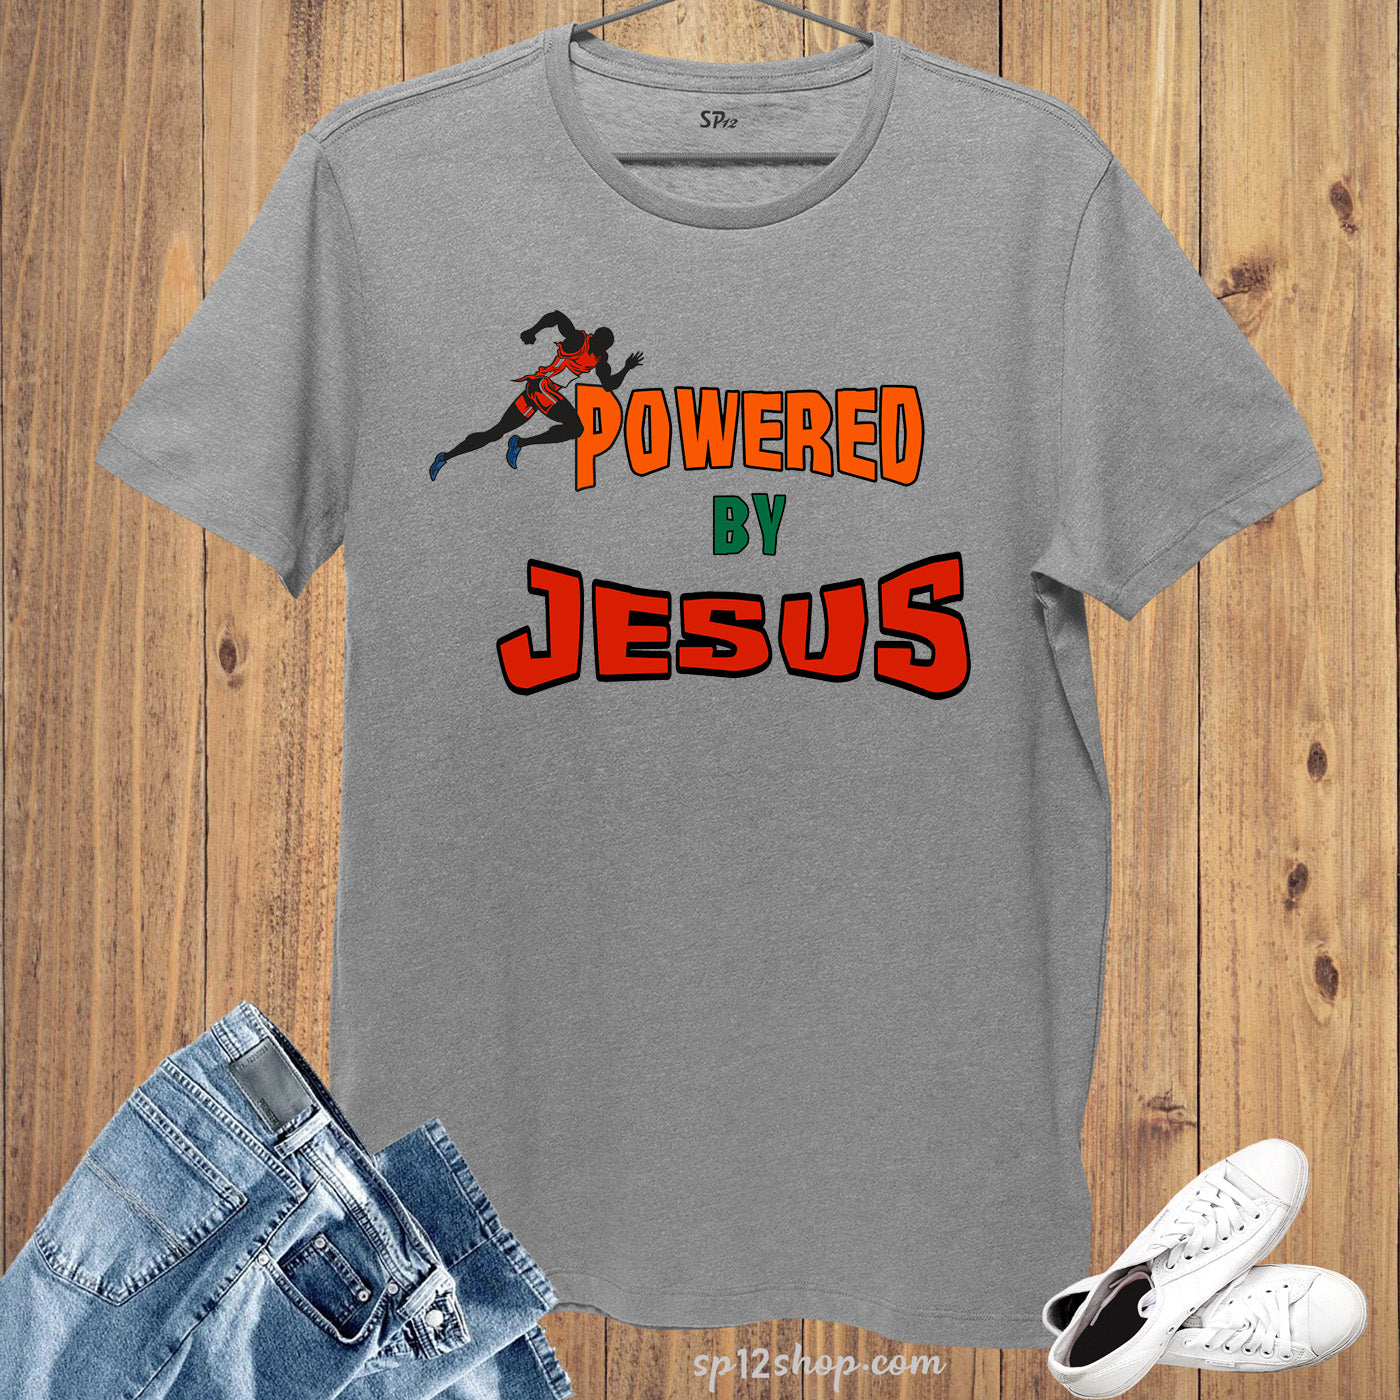 Gym Fitness Crossfit T shirt Powered By Jesus Sports Run tshirt tee